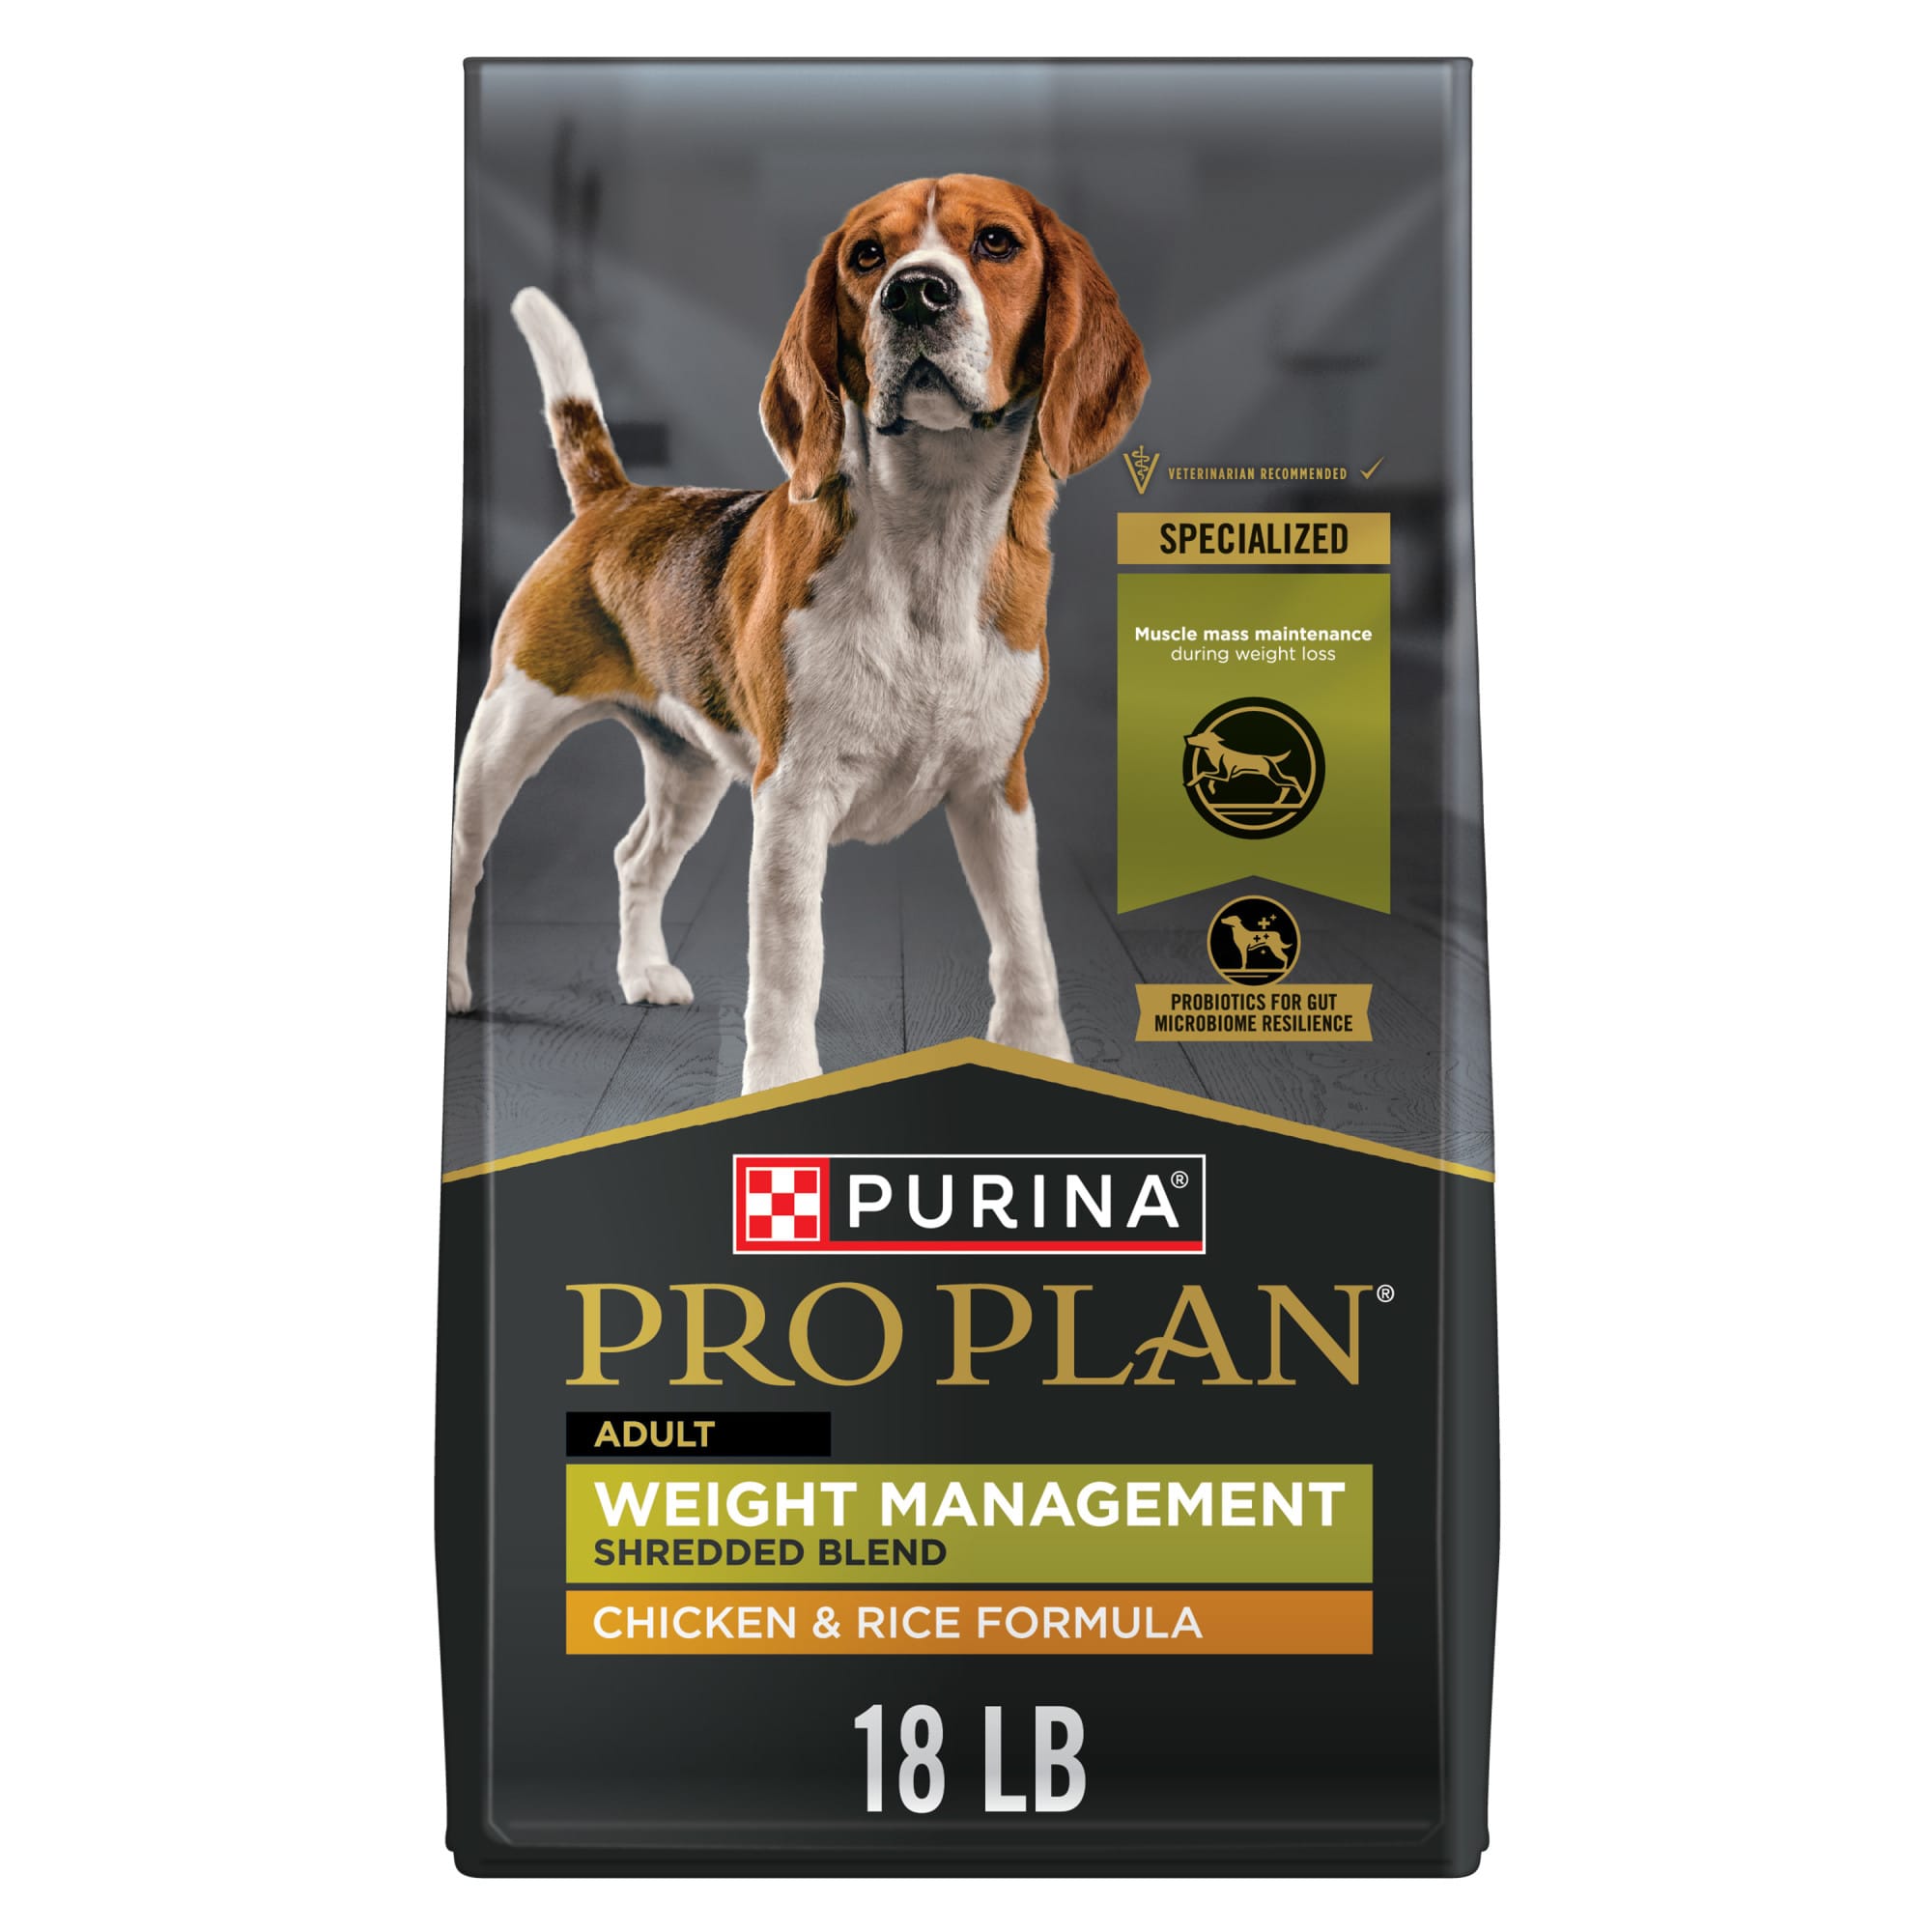 Purina Pro Plan Shredded Blend Weight Management Chicken & Rice Formula